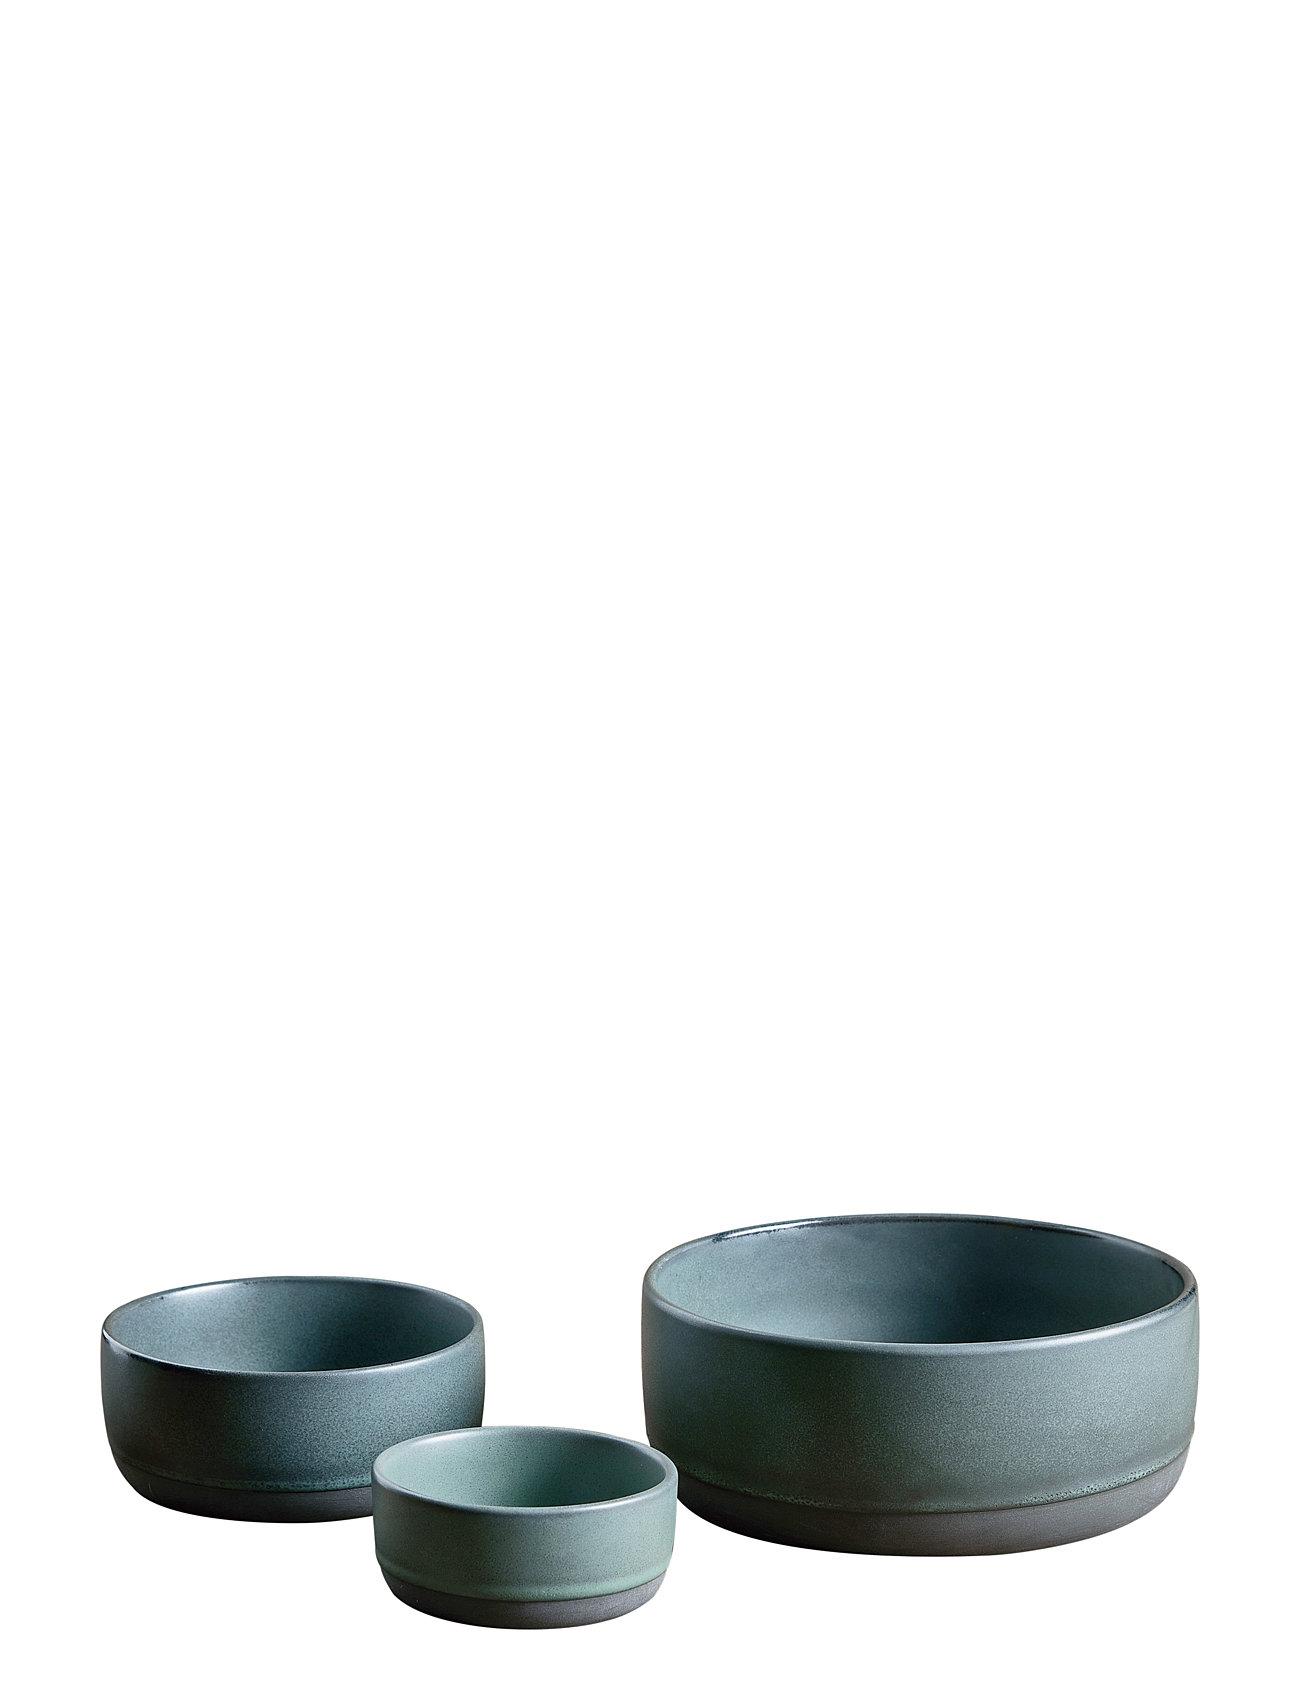 Raw Northern Green - Bowlset 3 Pcs Home Tableware Bowls & Serving Dishes Serving Bowls Green Aida